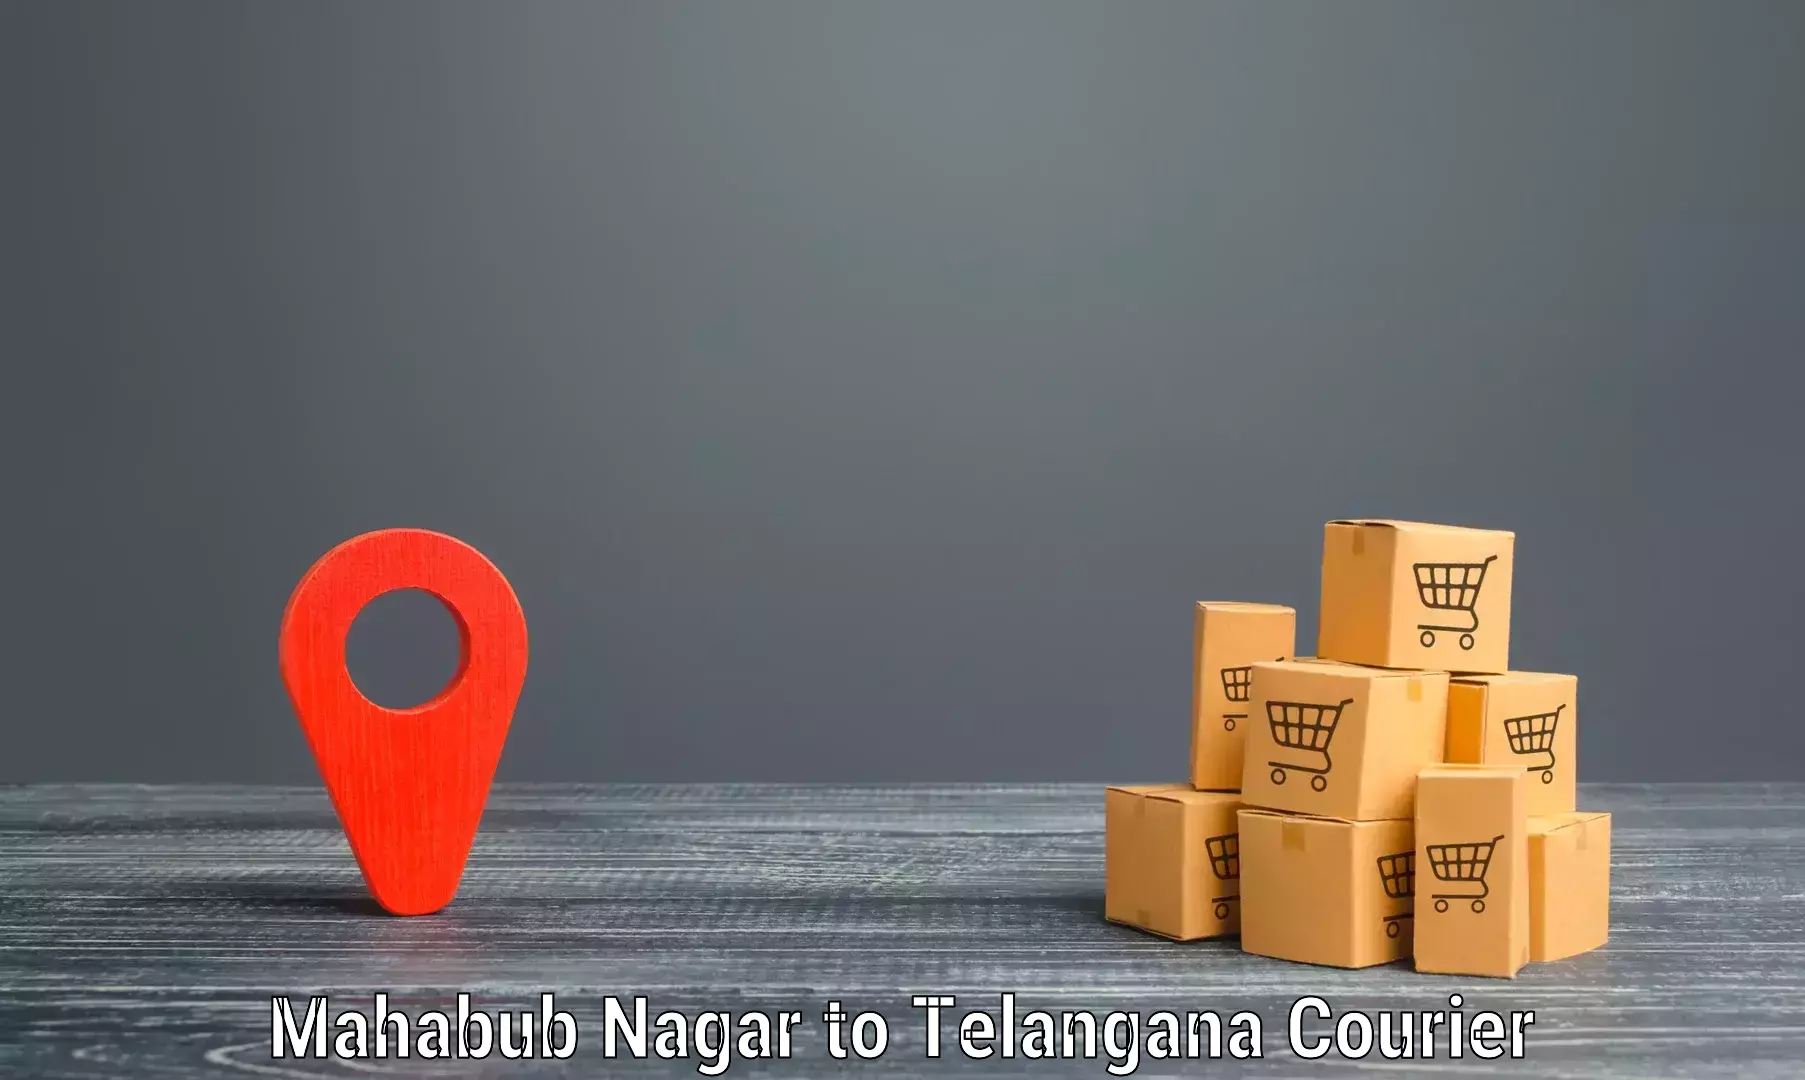 Global logistics network Mahabub Nagar to Kothakota